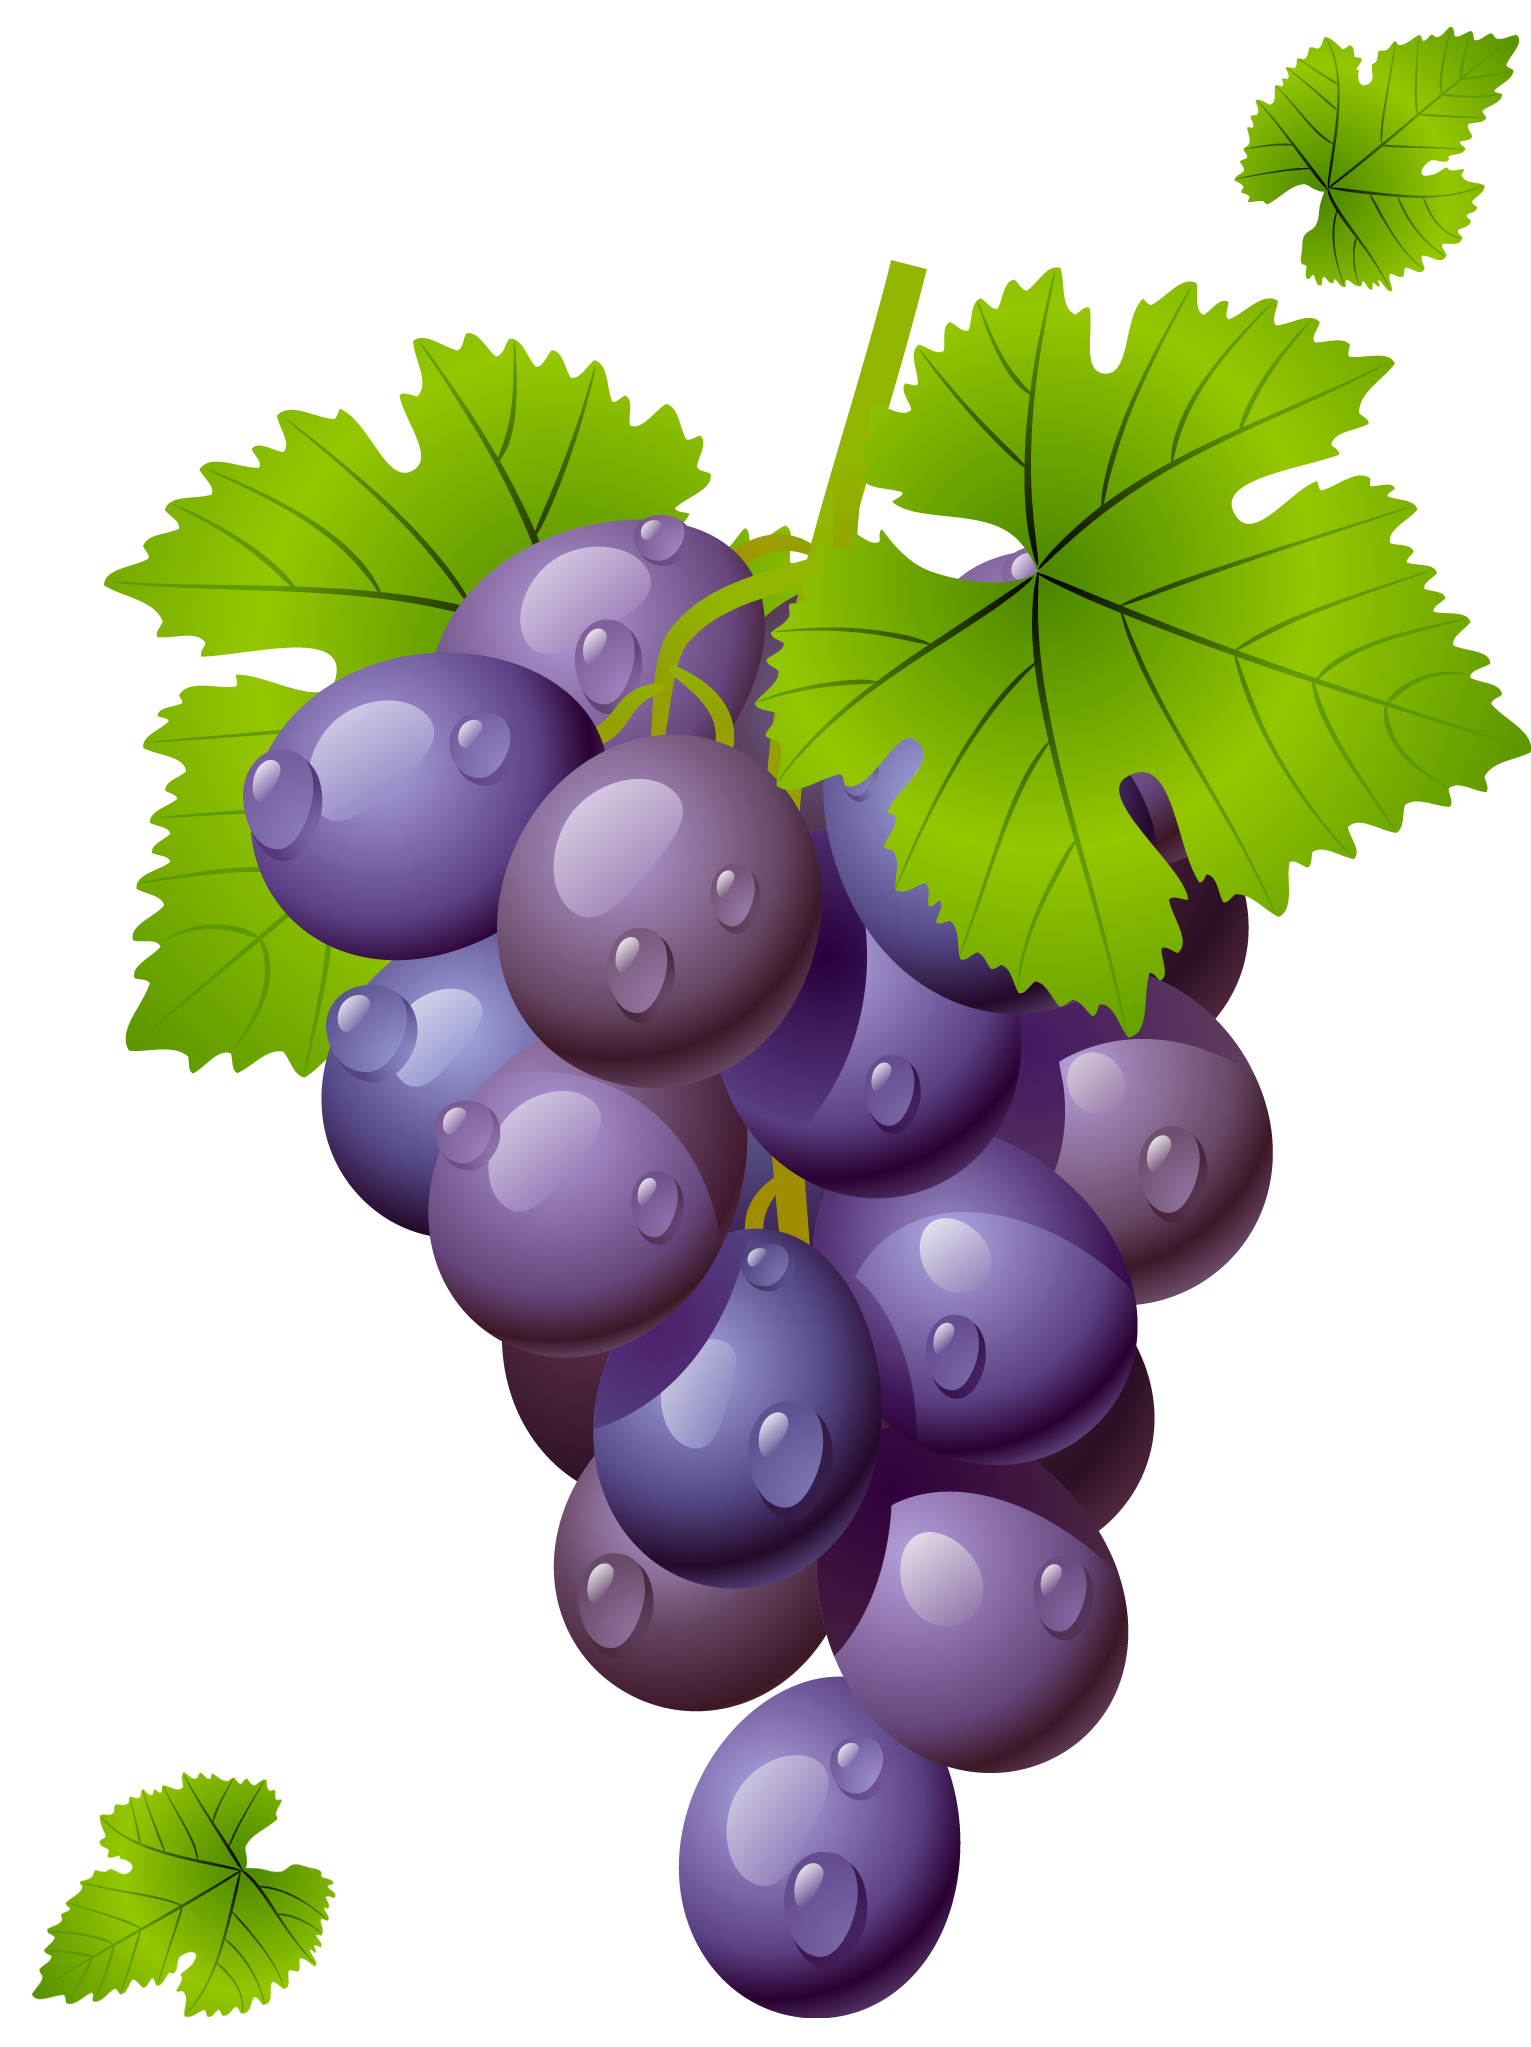 grape free vector